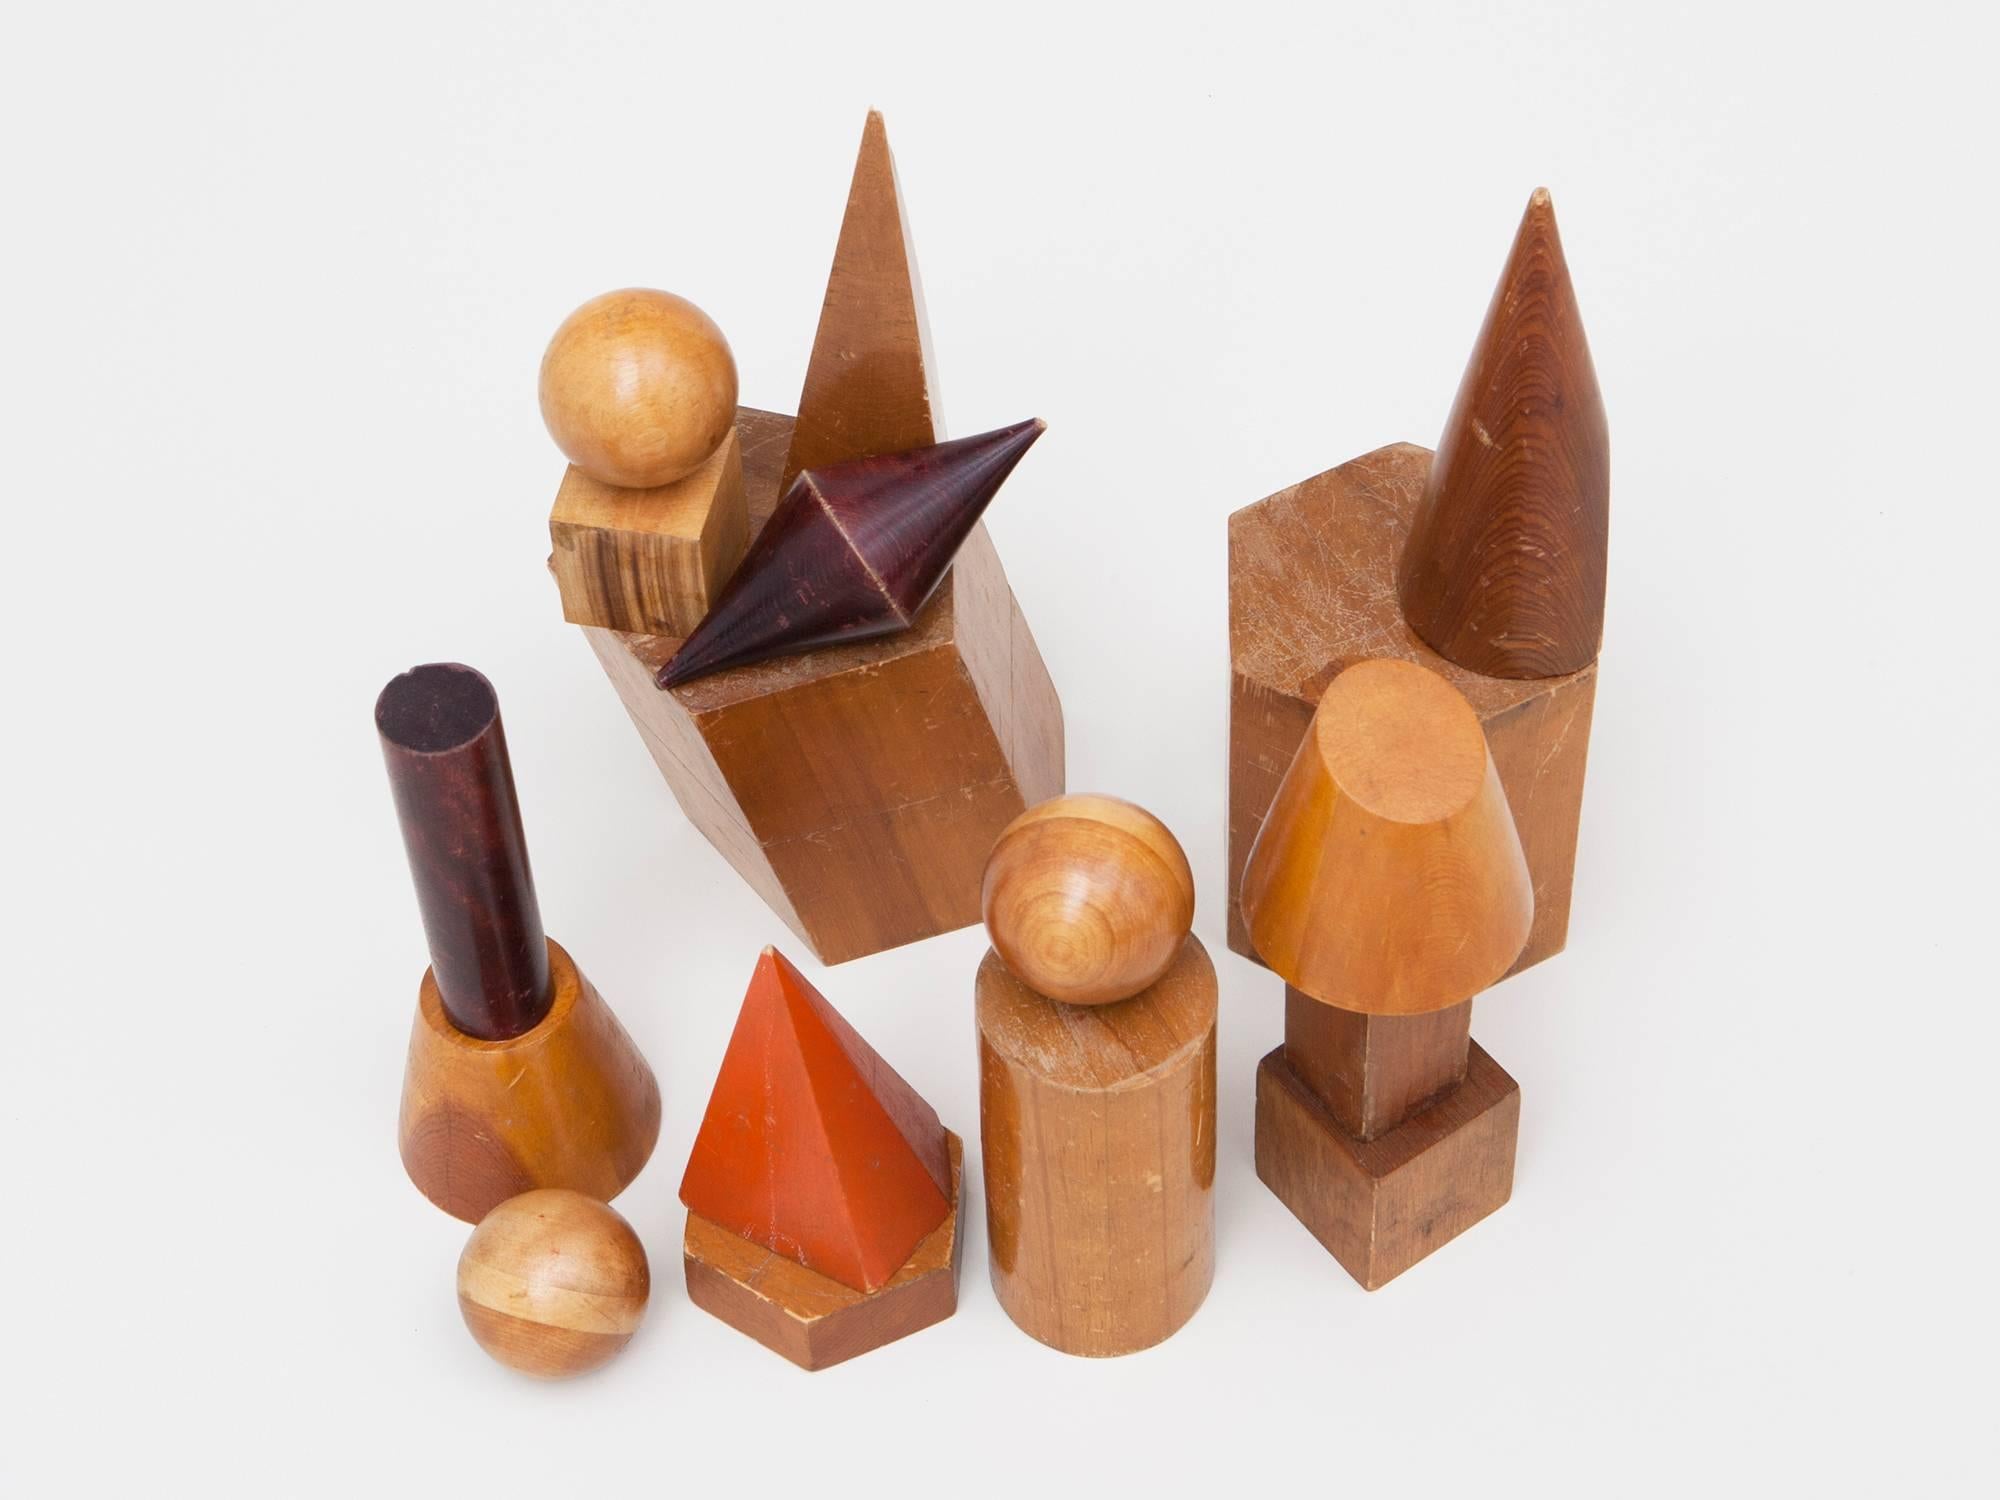 German Pre-War Wooden Geometric Blocks